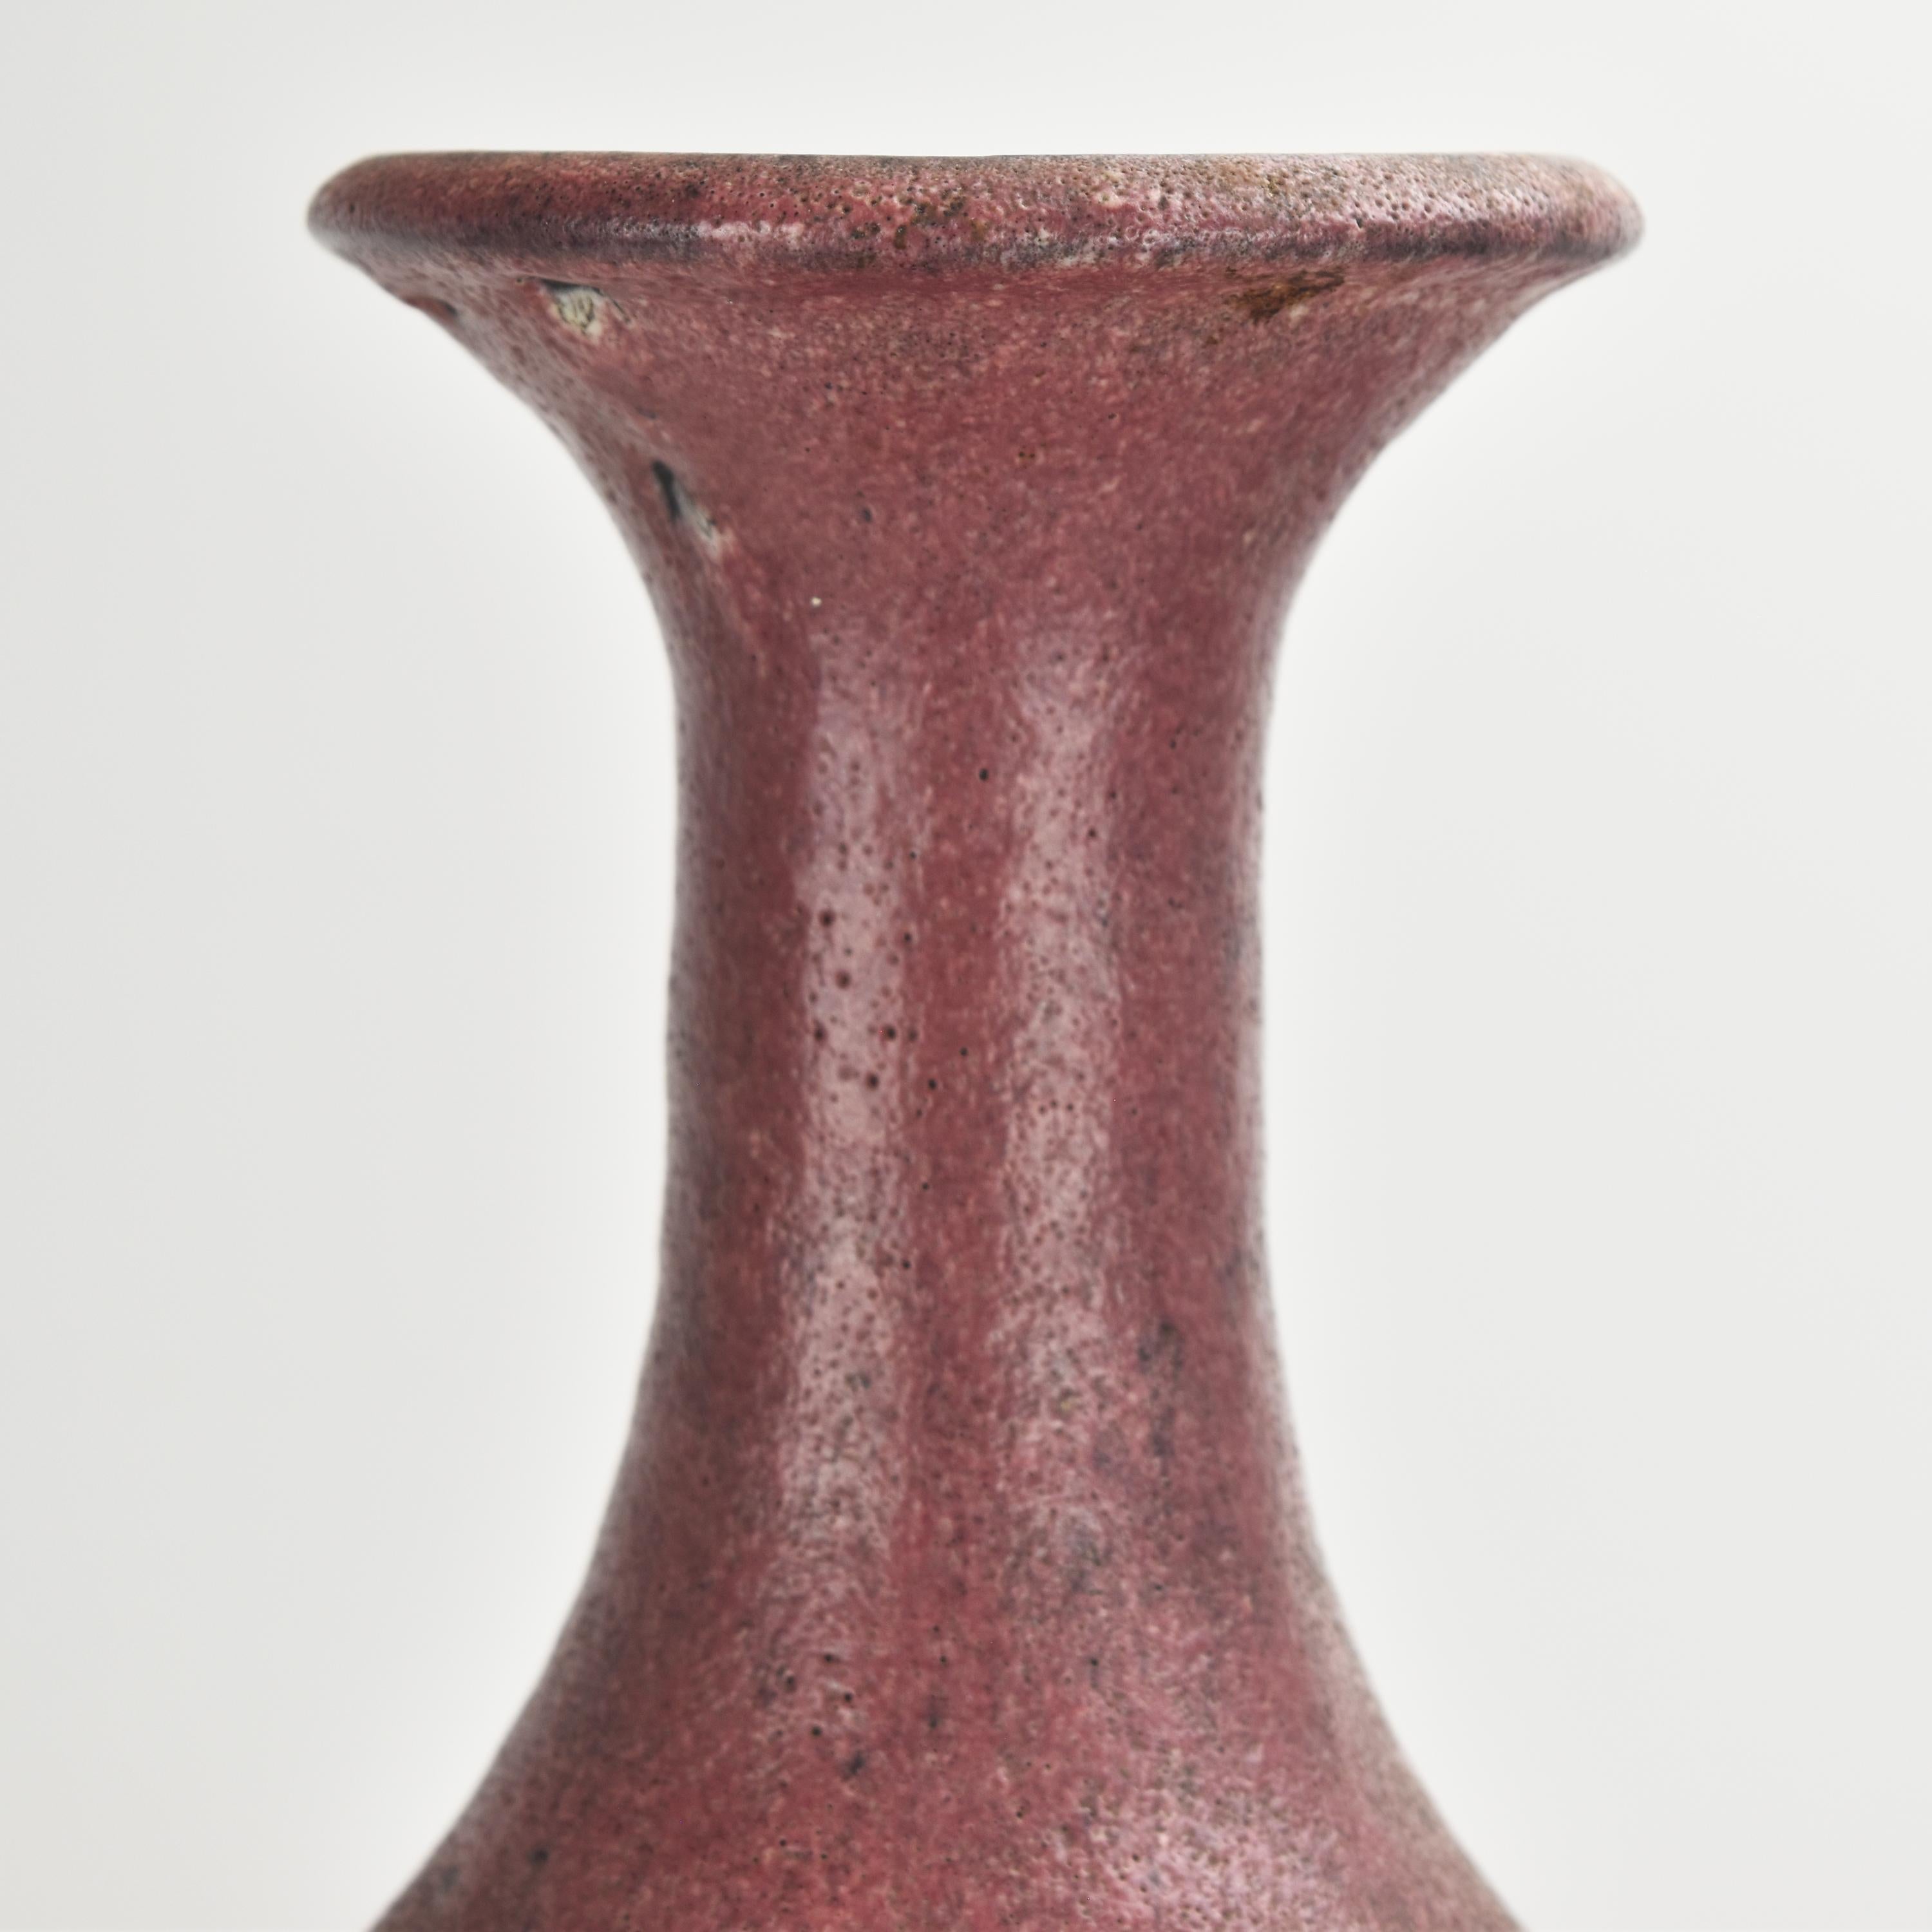 Vintage Swiss Andre Freymond Studio Art Pottery Vase In Excellent Condition For Sale In Bad Säckingen, DE